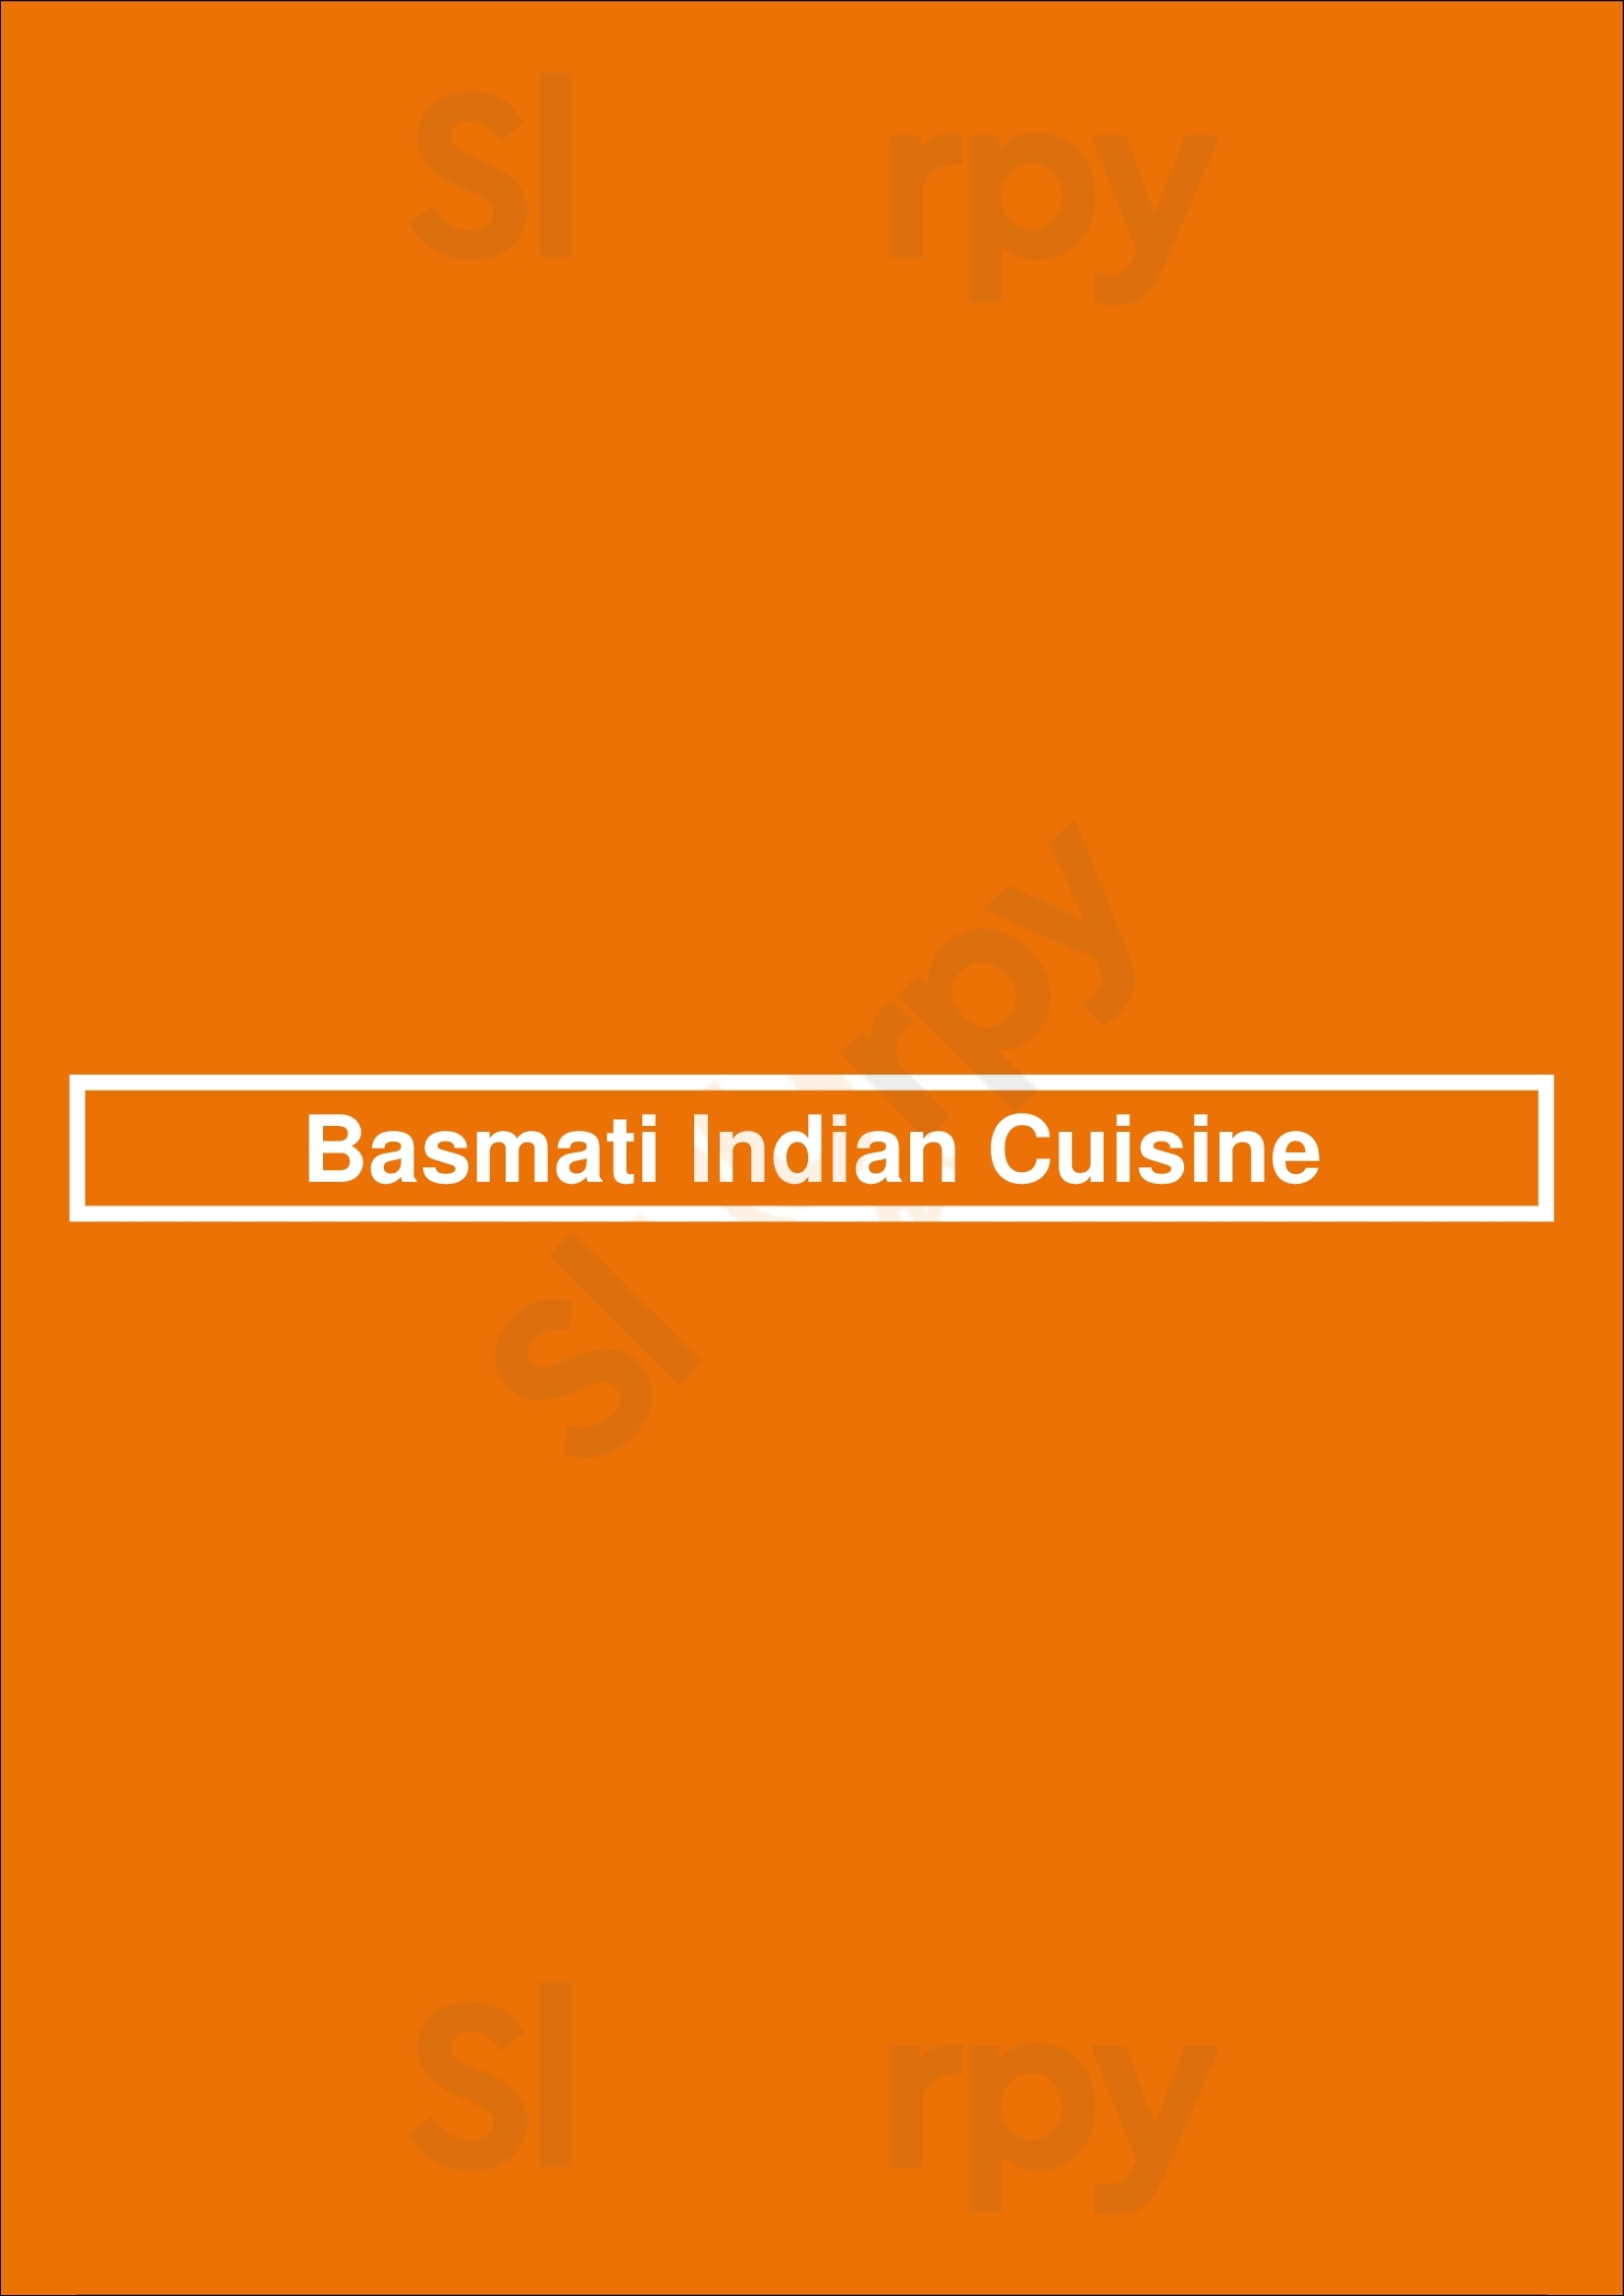 Basmati Indian Cuisine Bexhill-on-Sea Menu - 1